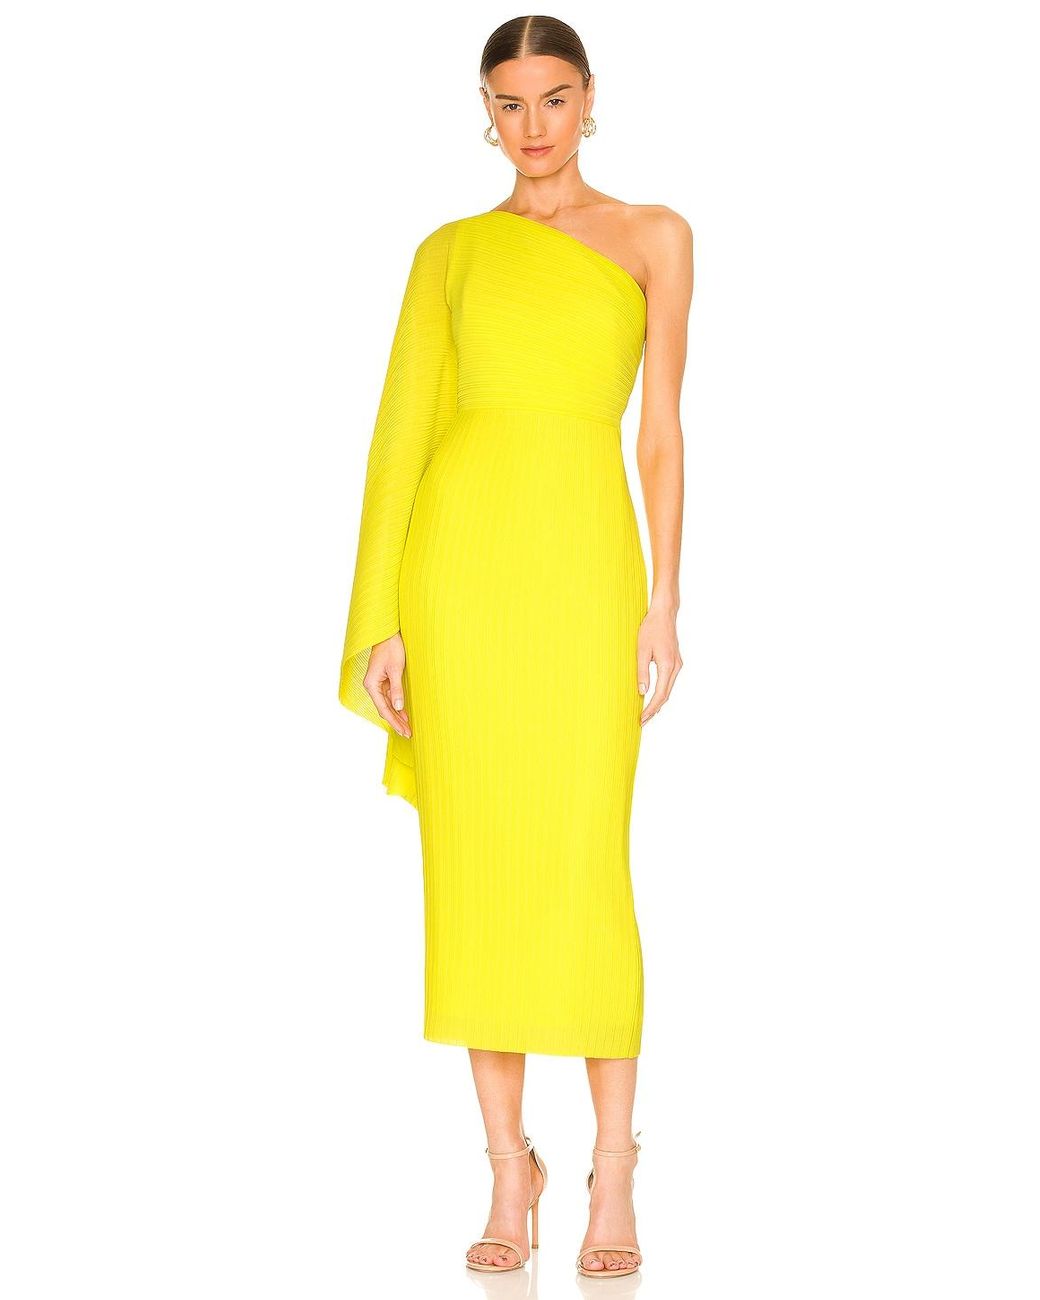 Solace London Lenna Midi Dress in Yellow | Lyst